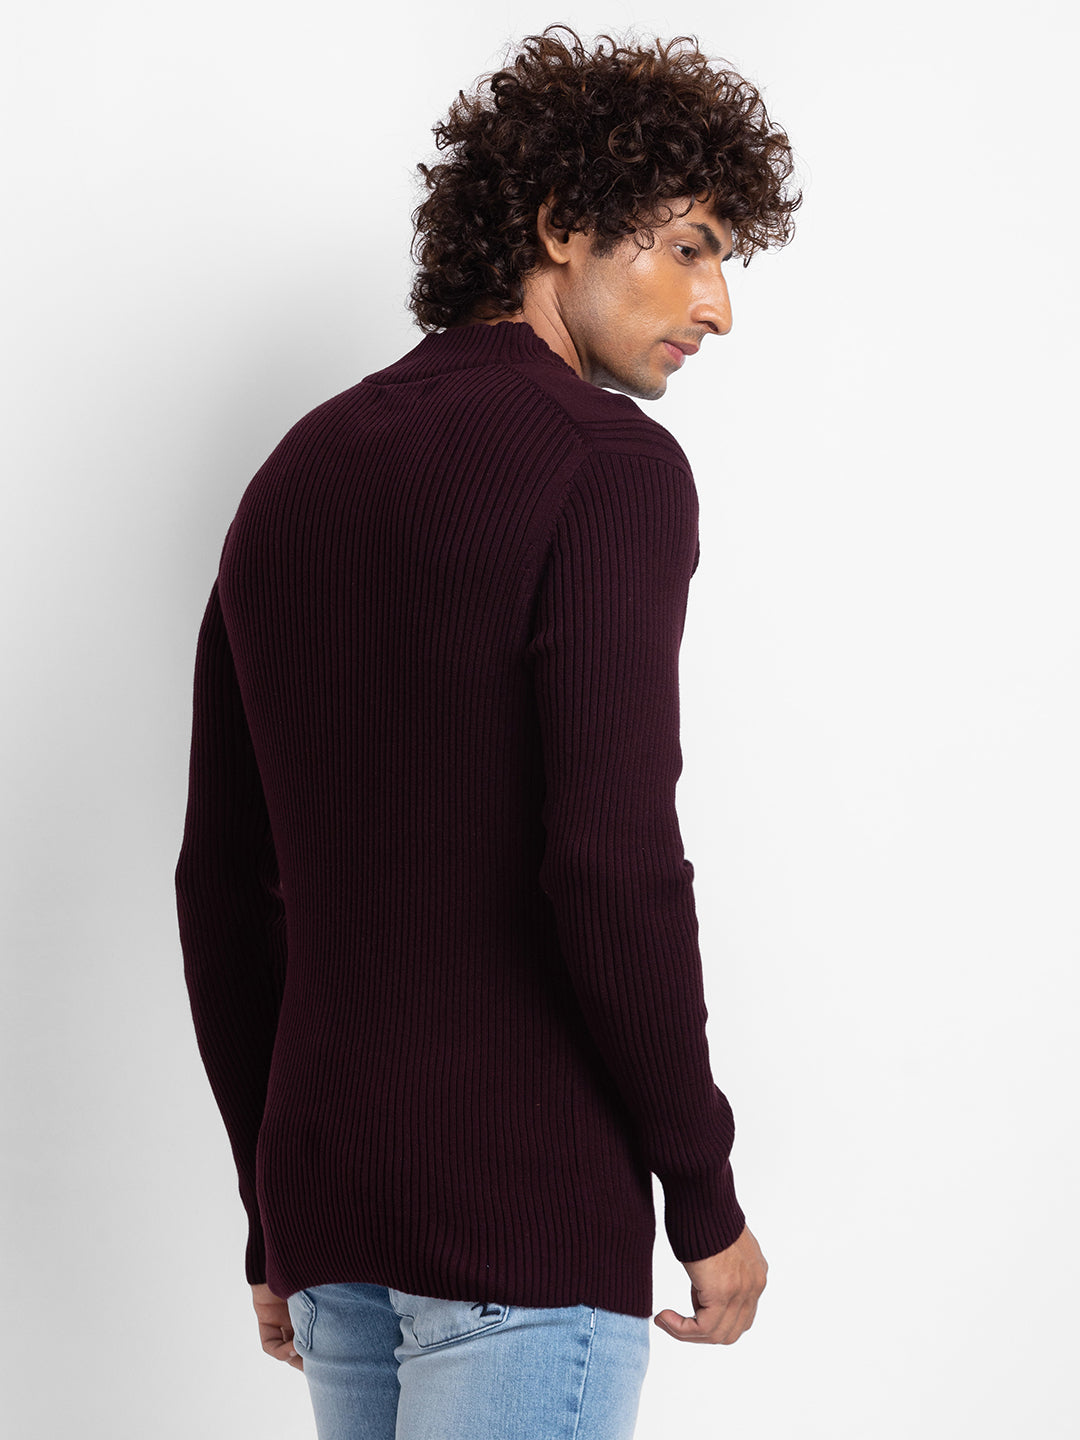 Spykar Wine Cotton Full Sleeve Casual Sweater For Men